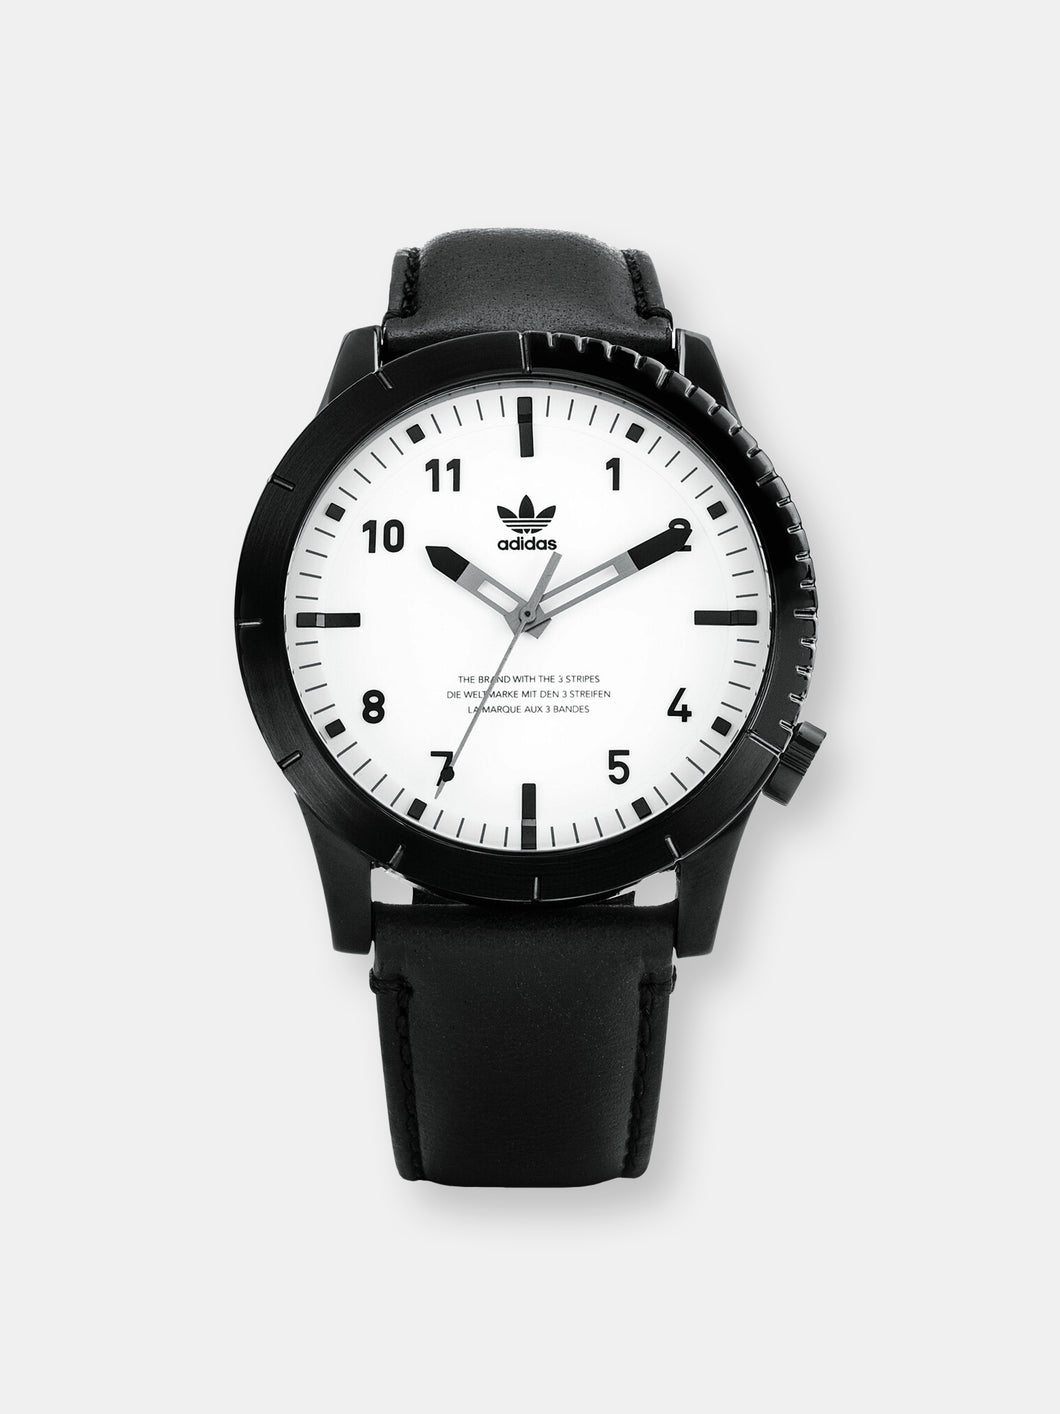 Adidas Men's Cypher Lx1 Z06 005-00 Black Leather Quartz Fashion Watch